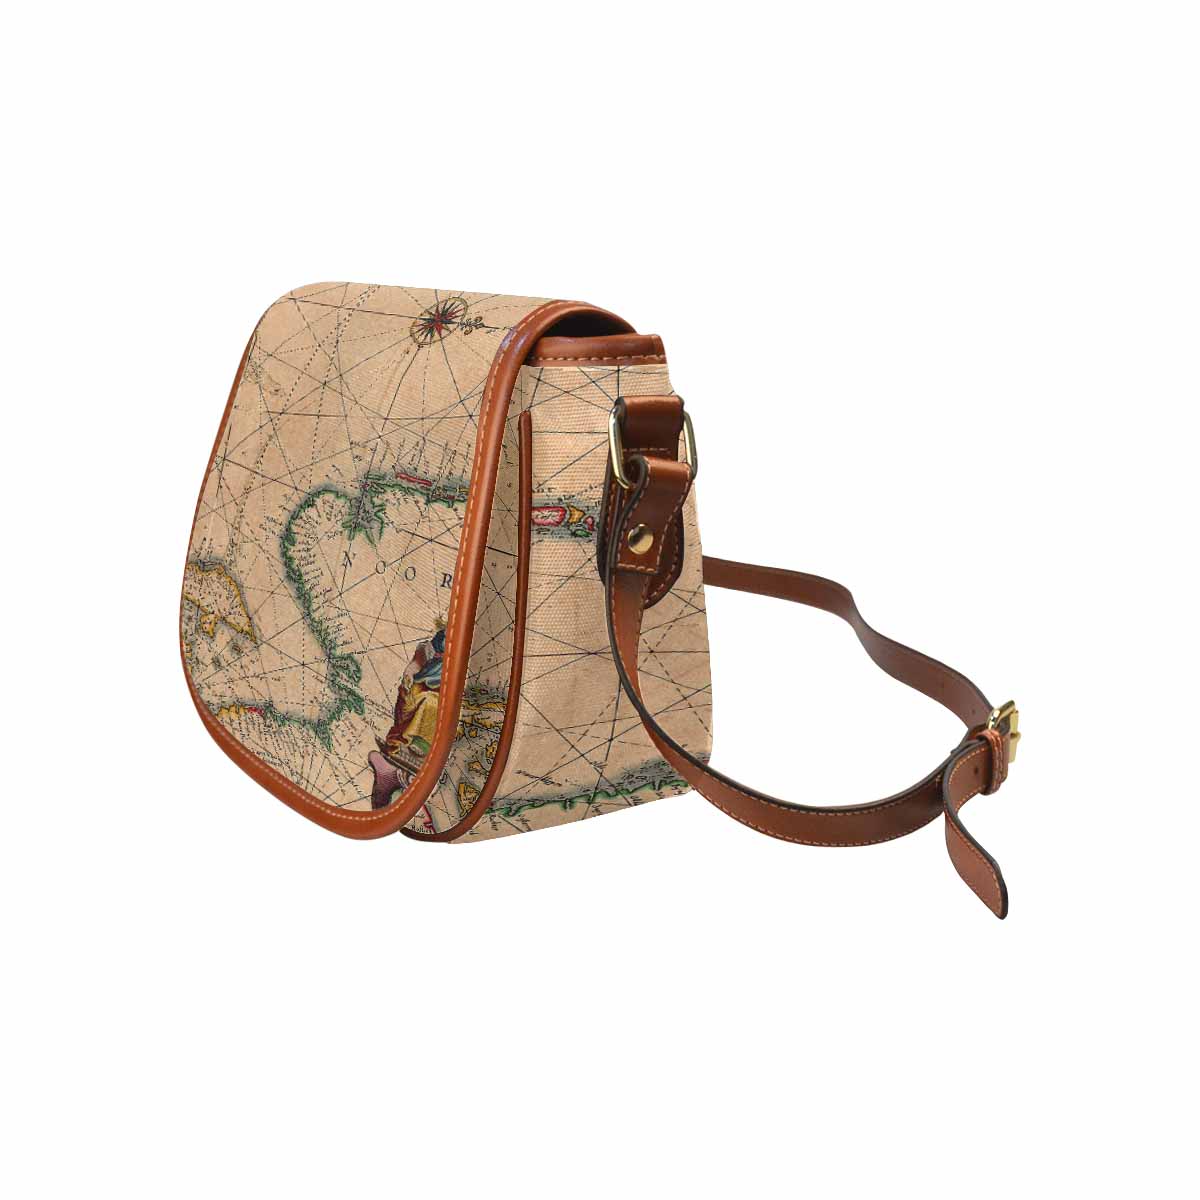 Antique Map design Handbag, saddle bag, Design 7